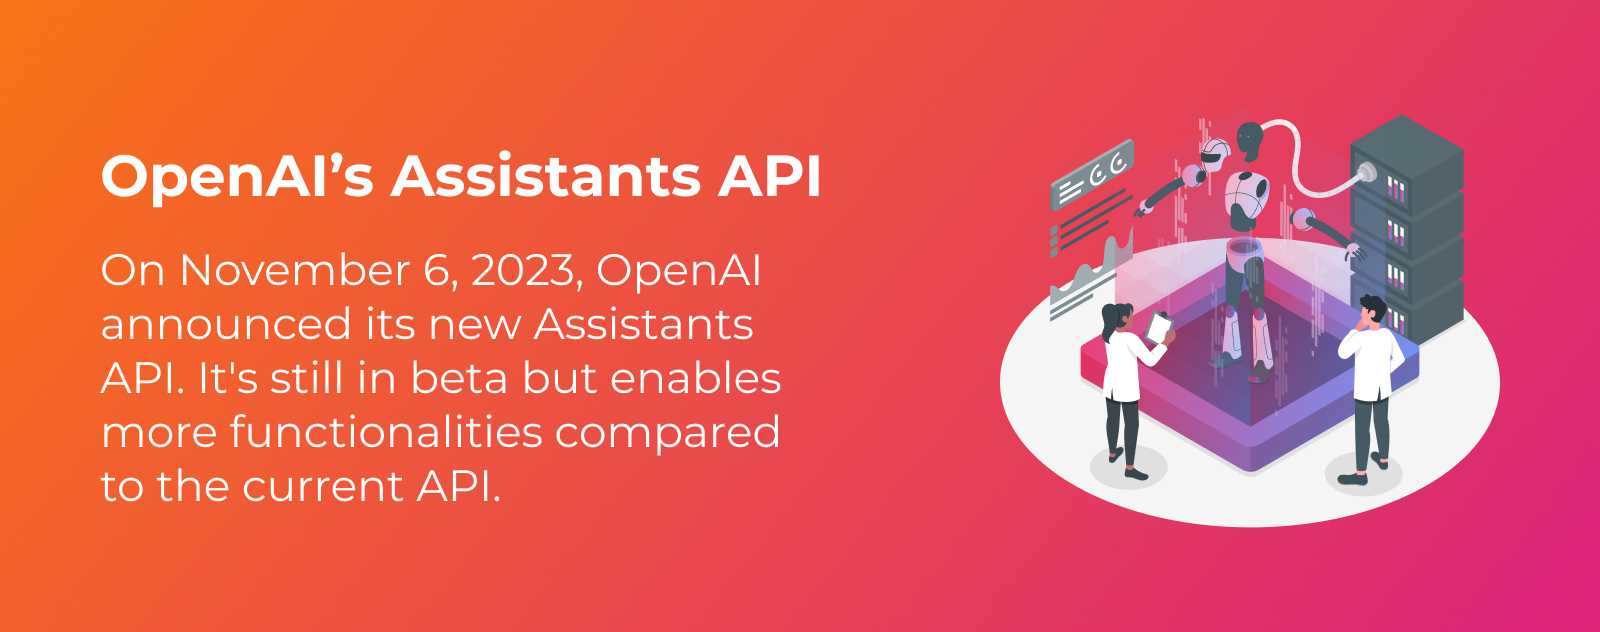 OpenAI's Assistants API